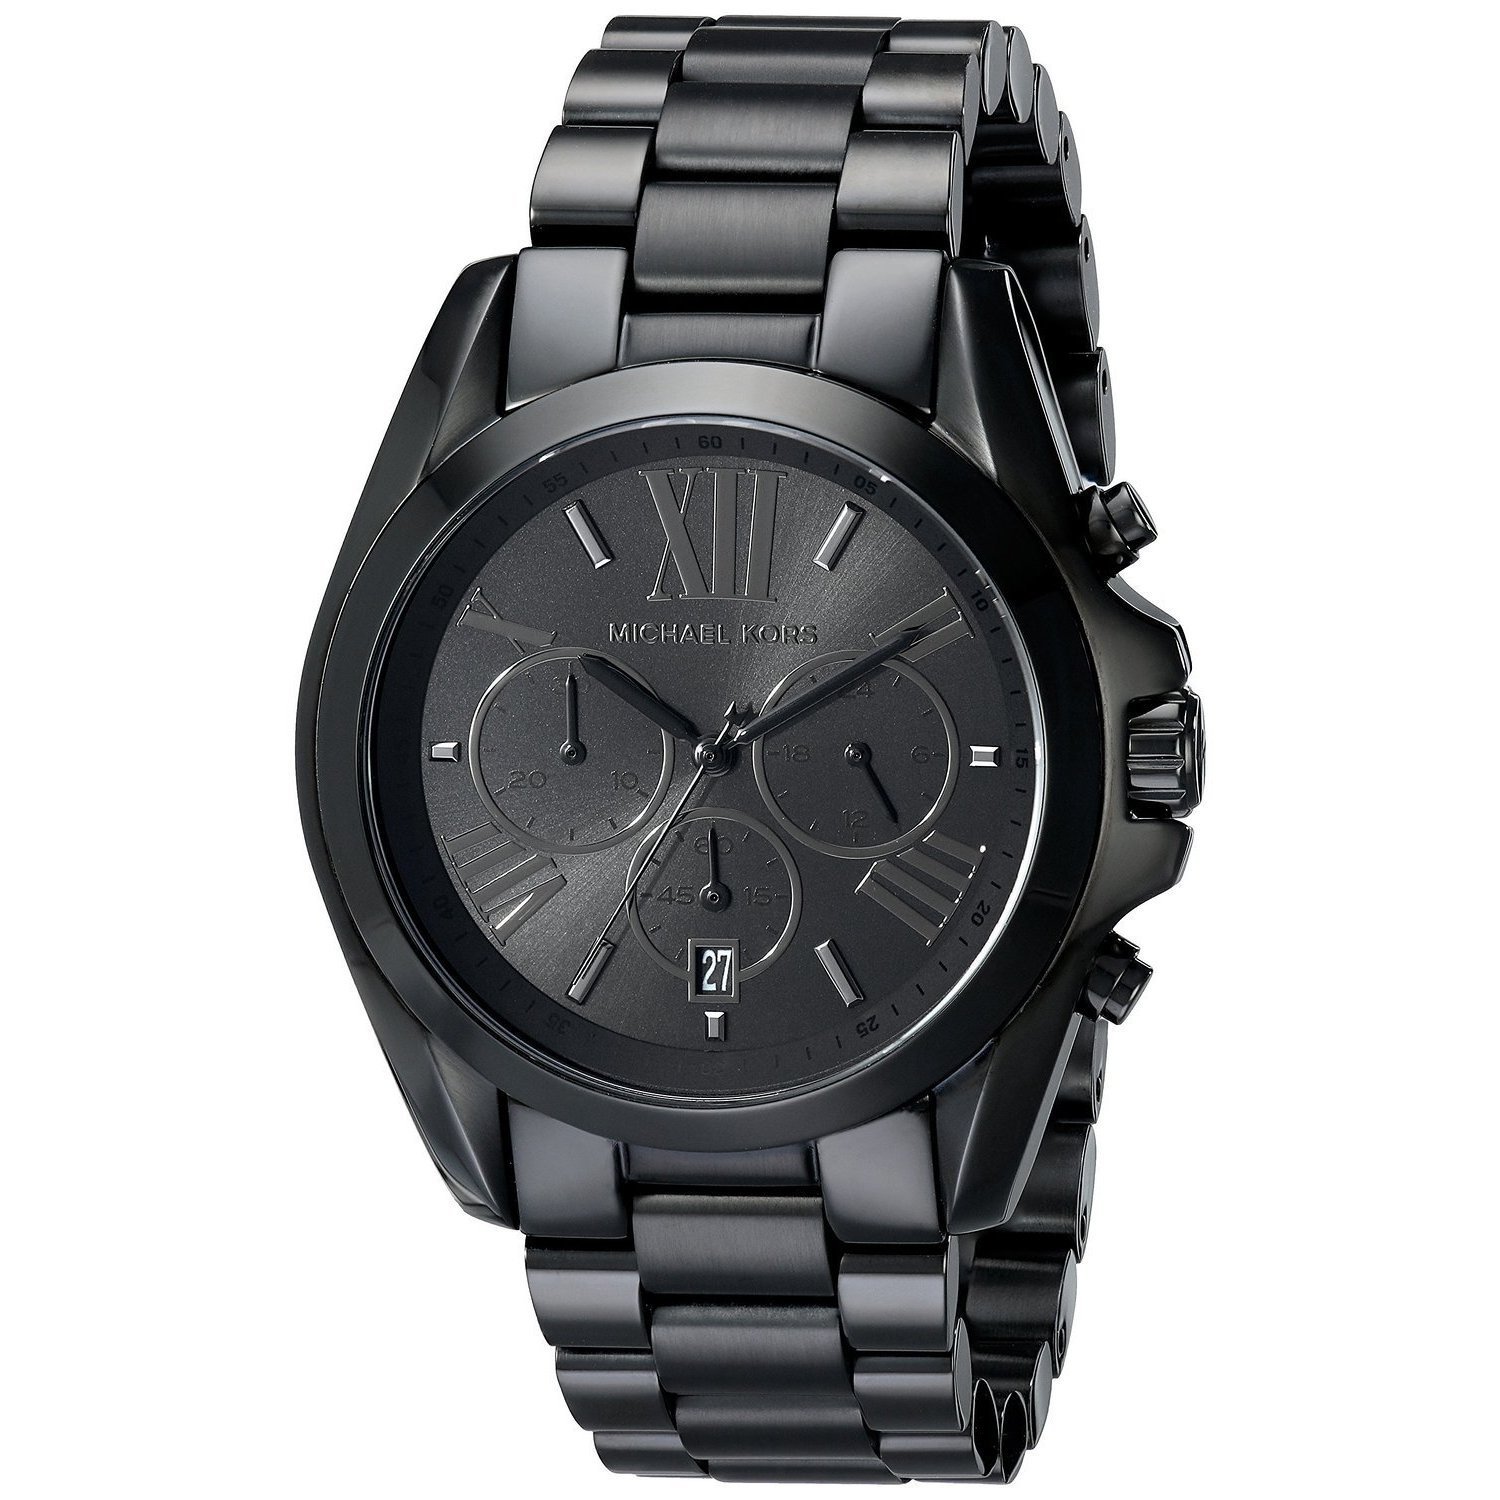 MK black watch